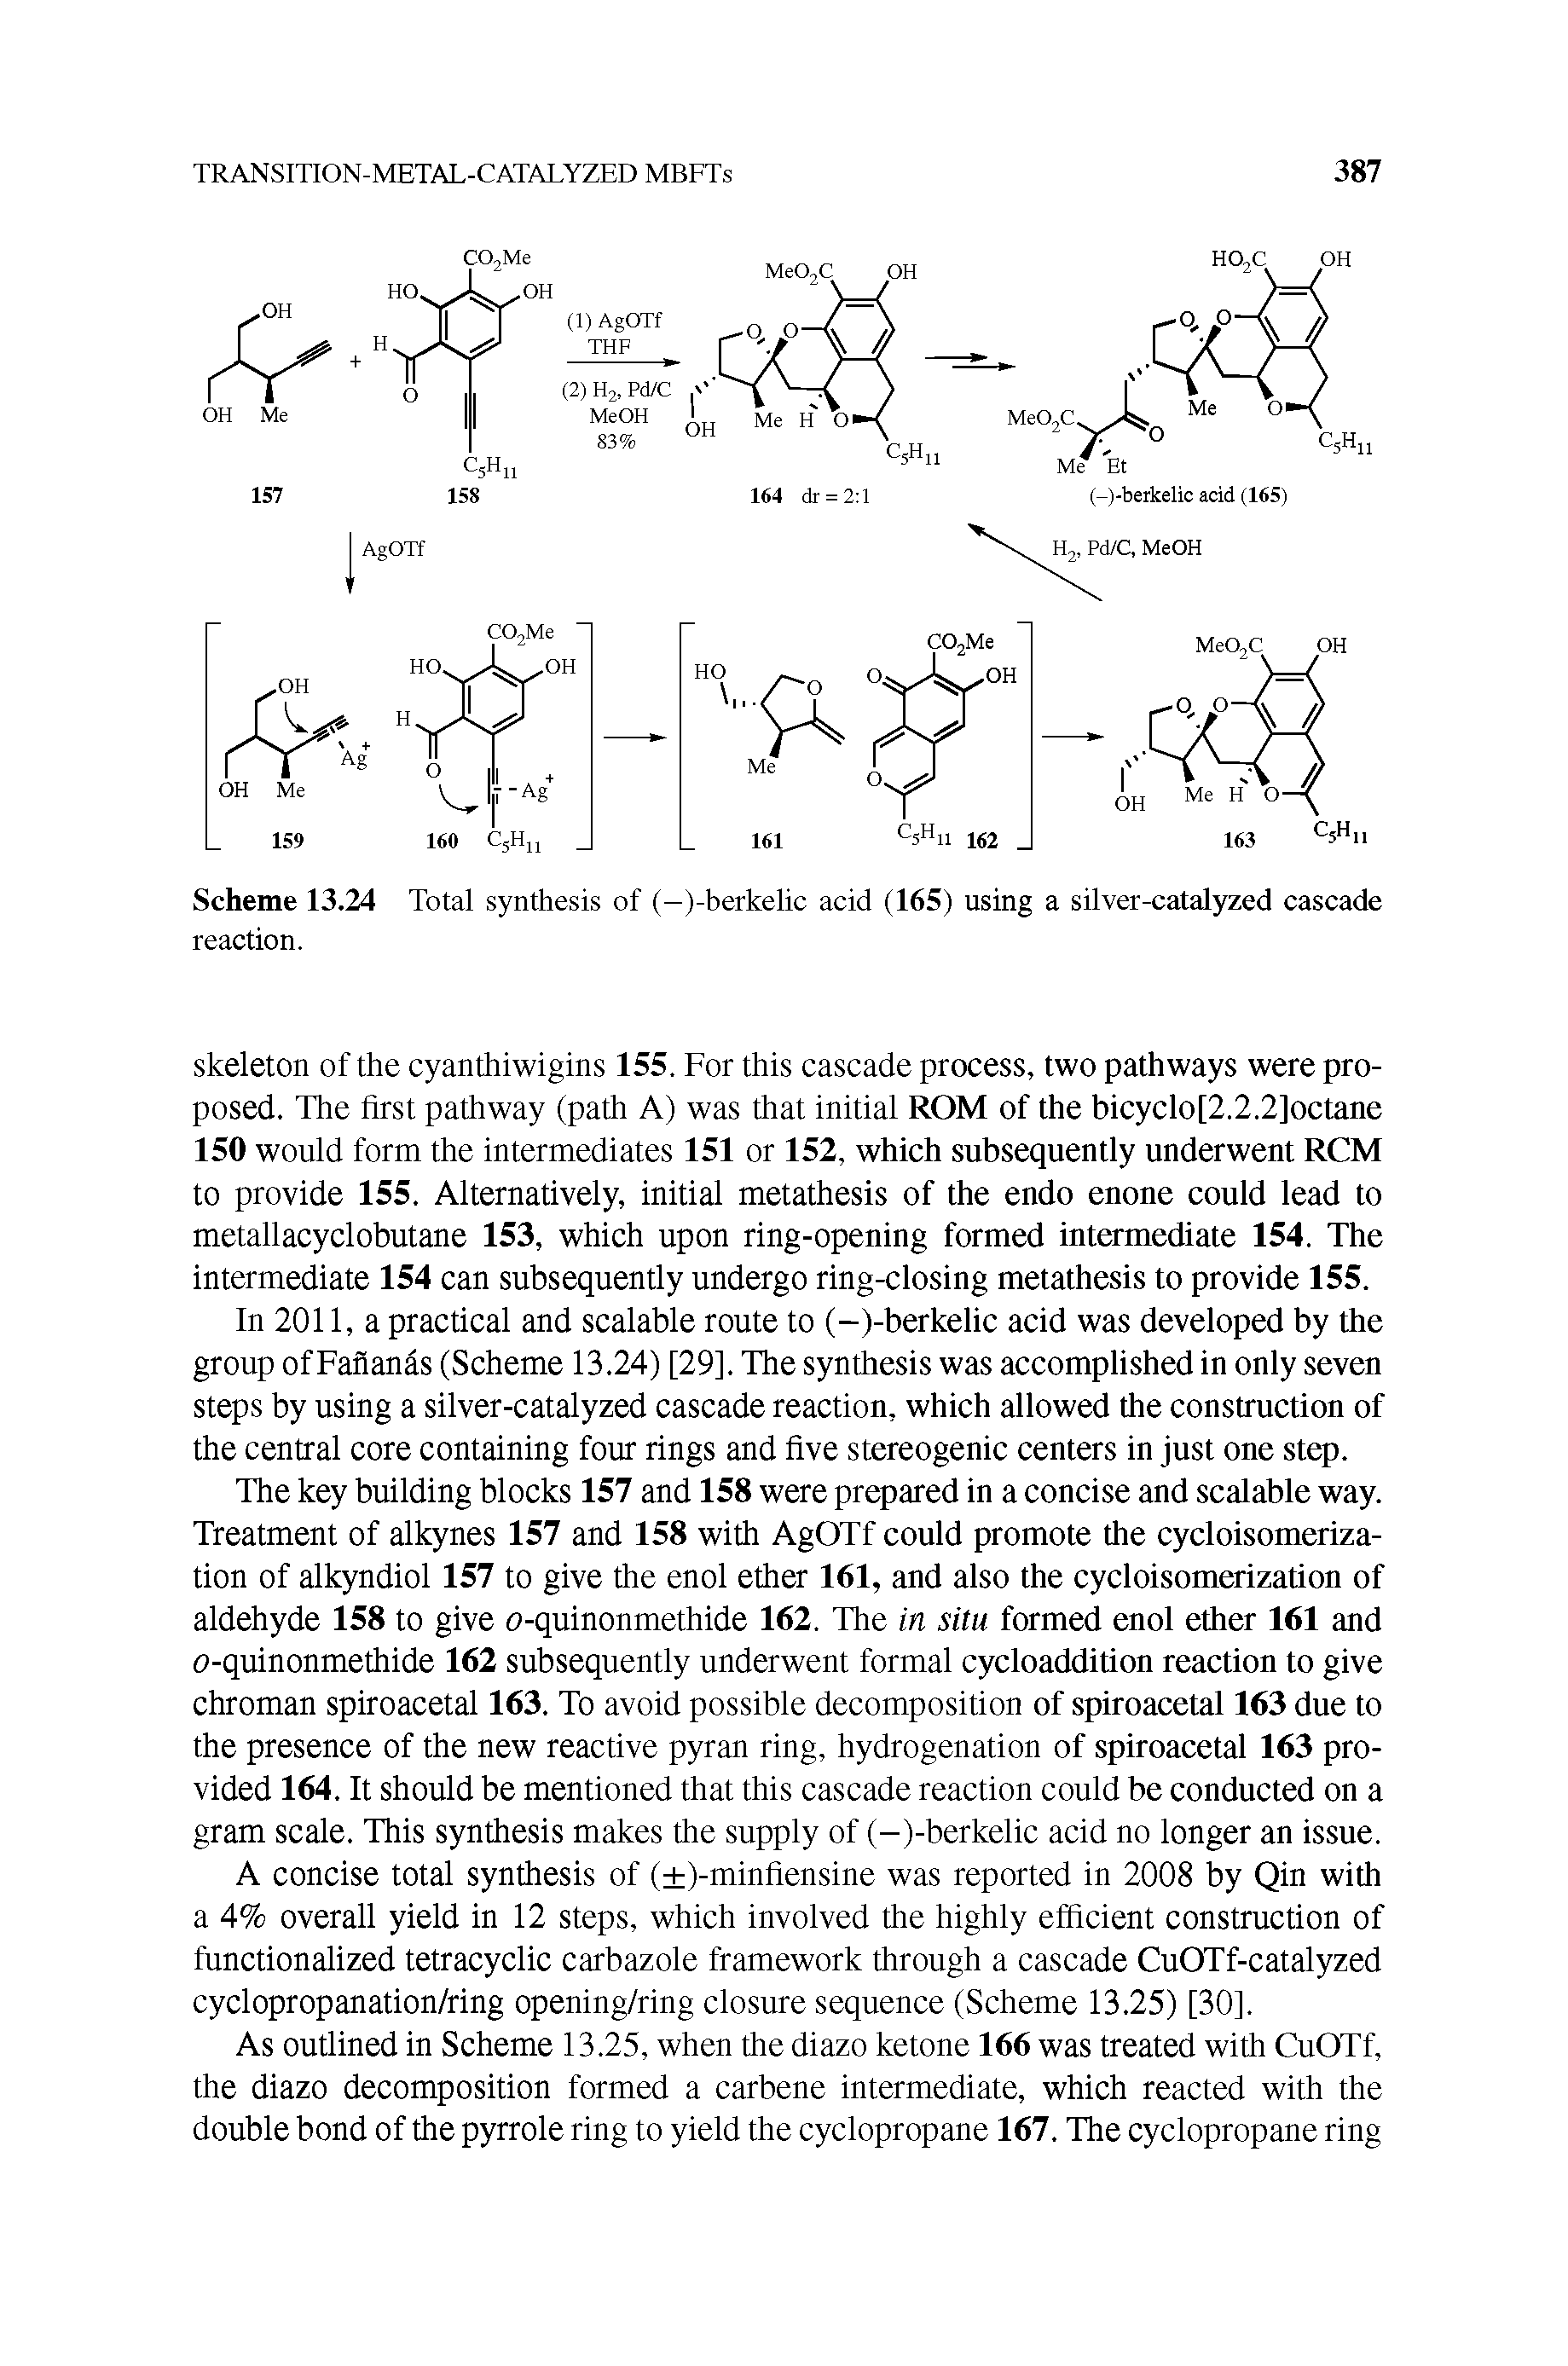 Scheme 13.24 Total synthesis of (-)-berkelic acid (165) using a silver-catalyzed cascade reaction.